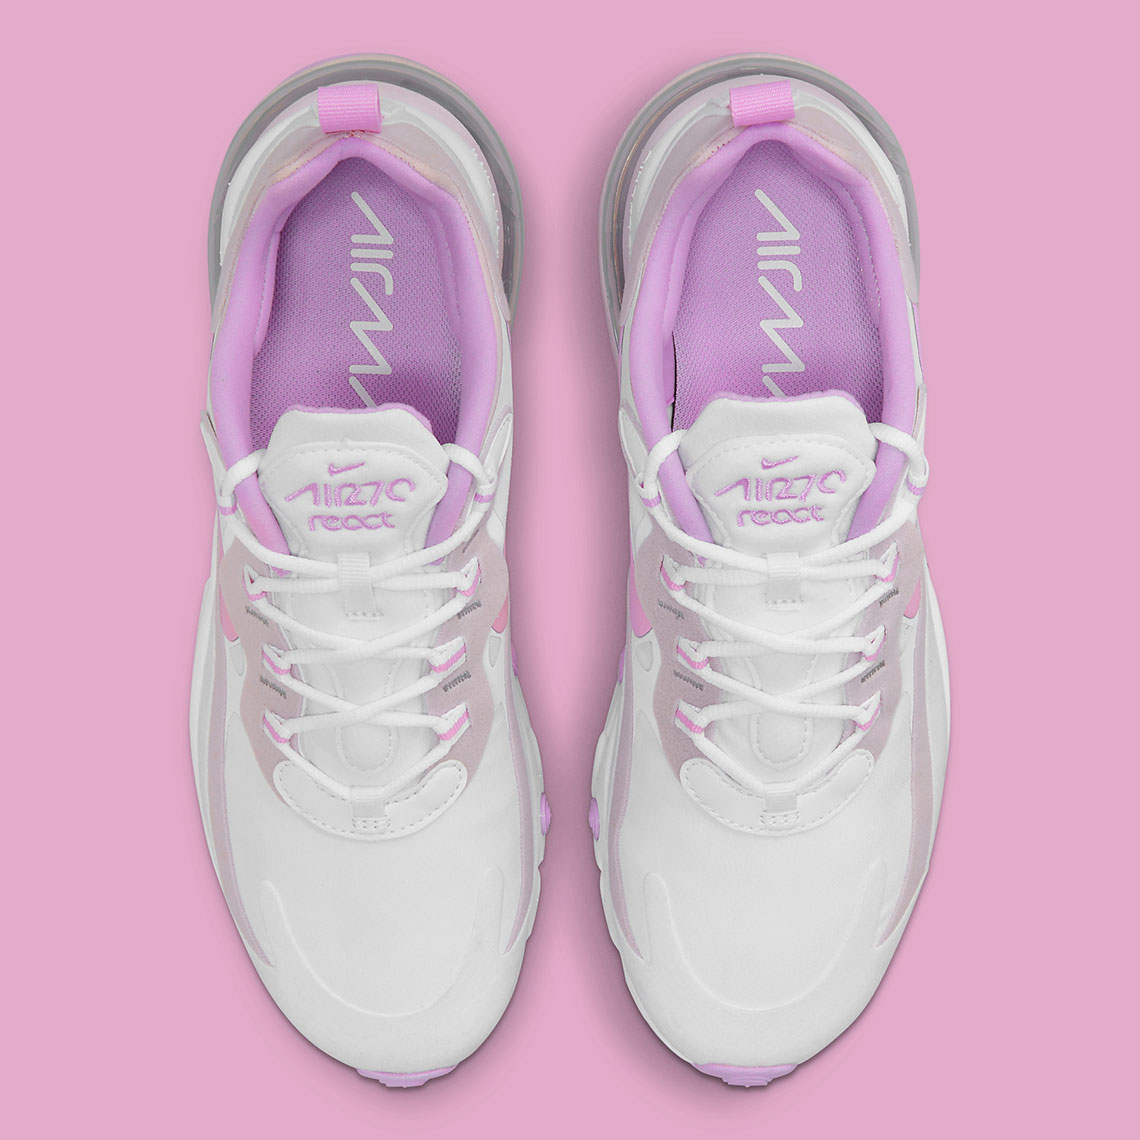 Nike nike fc247 elastico ii junior pants shoes size Wmns Grey Purple Cz1609 100 6